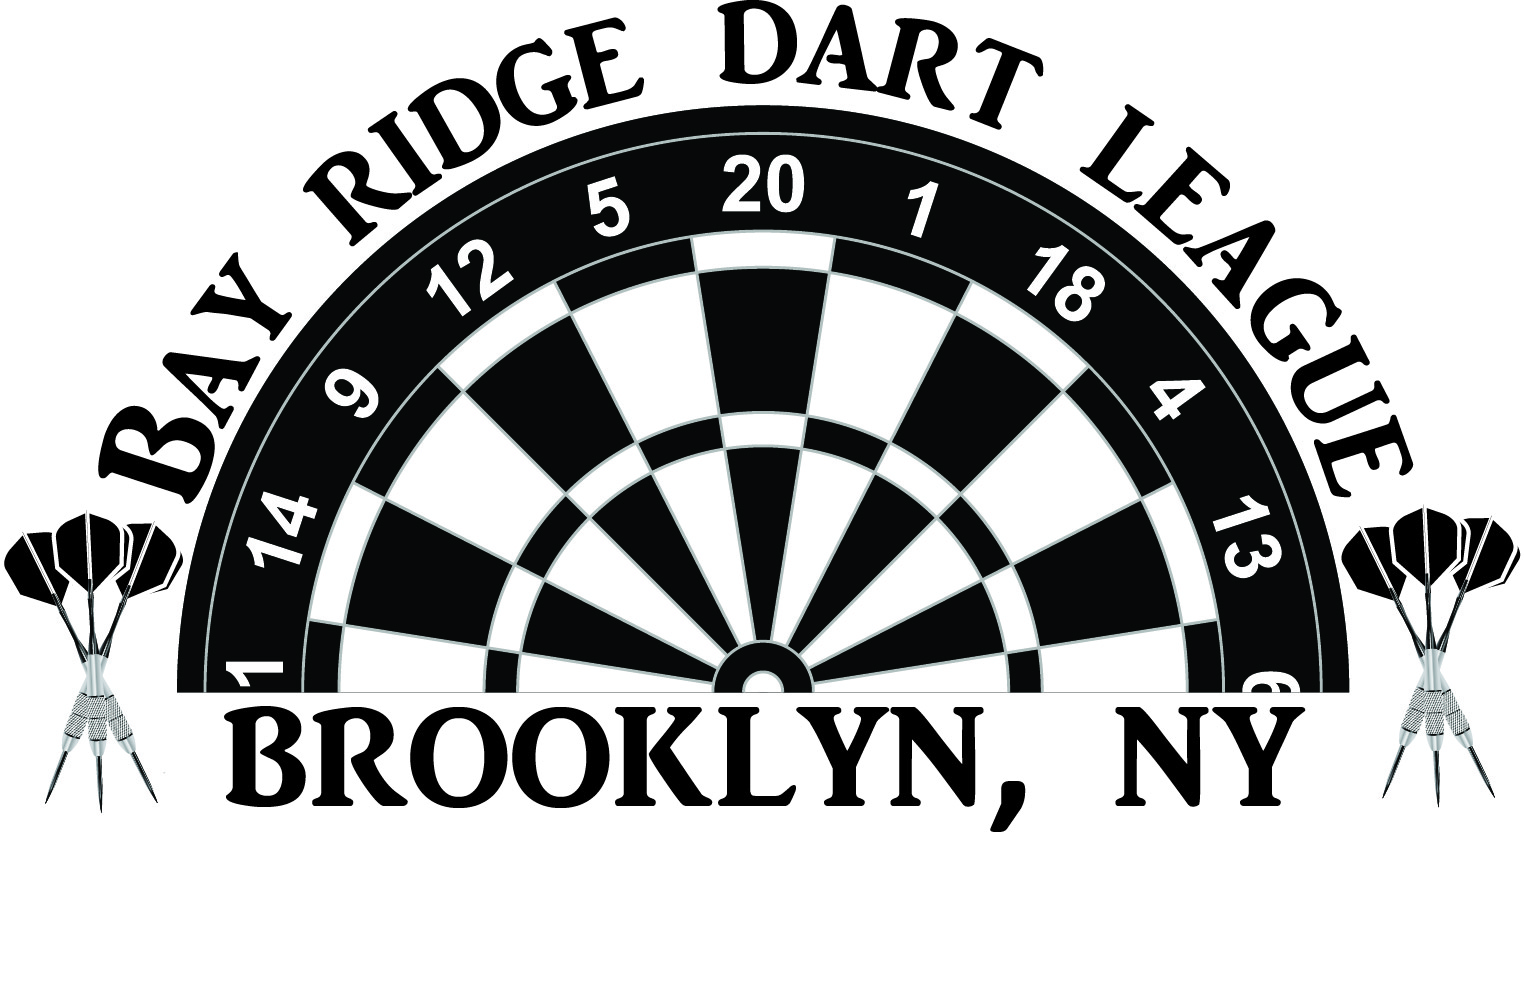 Bay Ridge Dart League logo